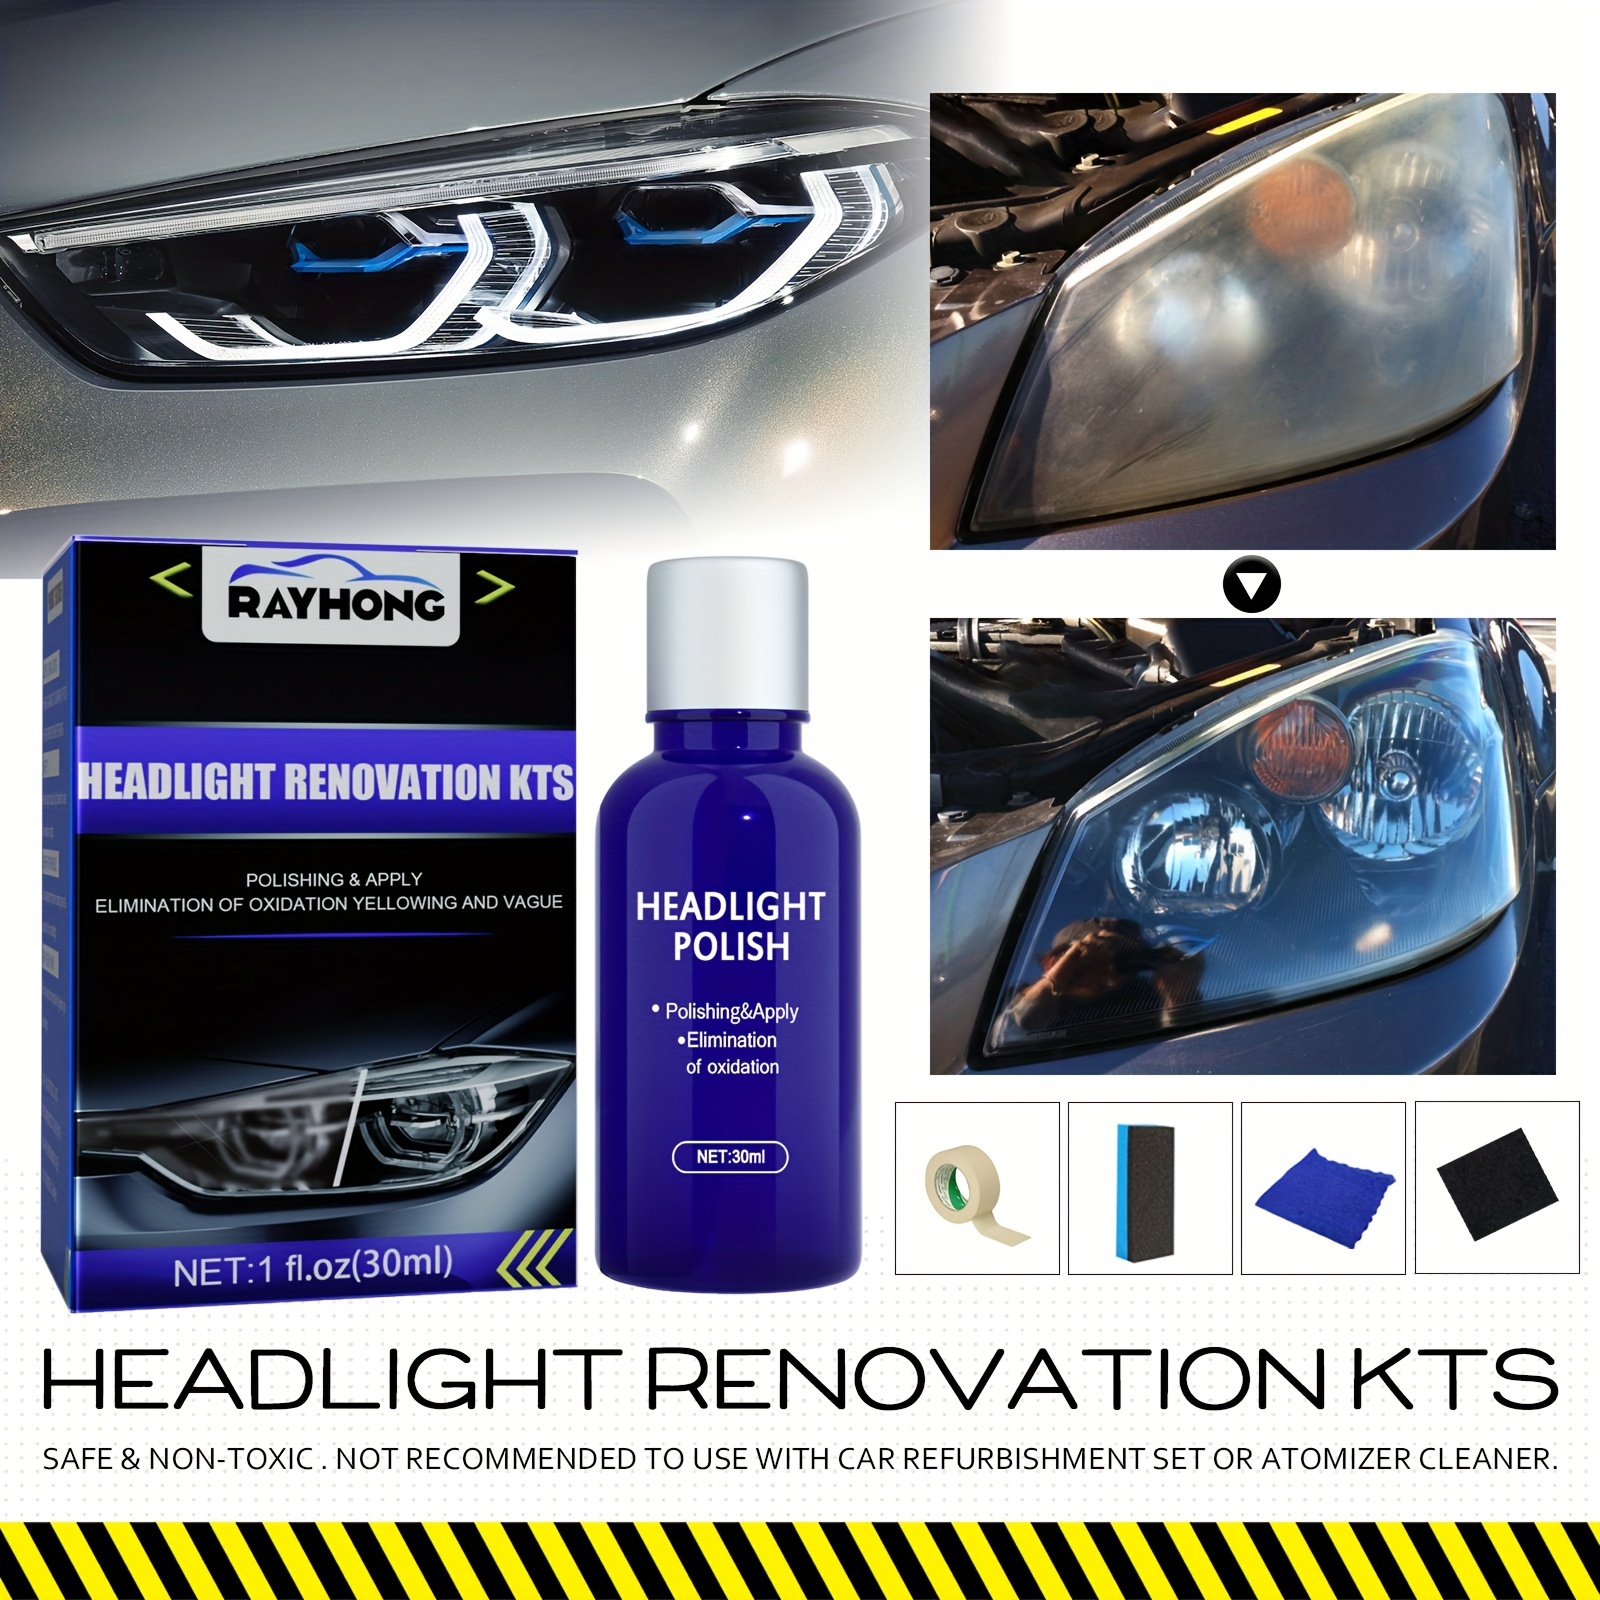 30ml Car Headlight Repairing Too Kit Headlight Coating Agent